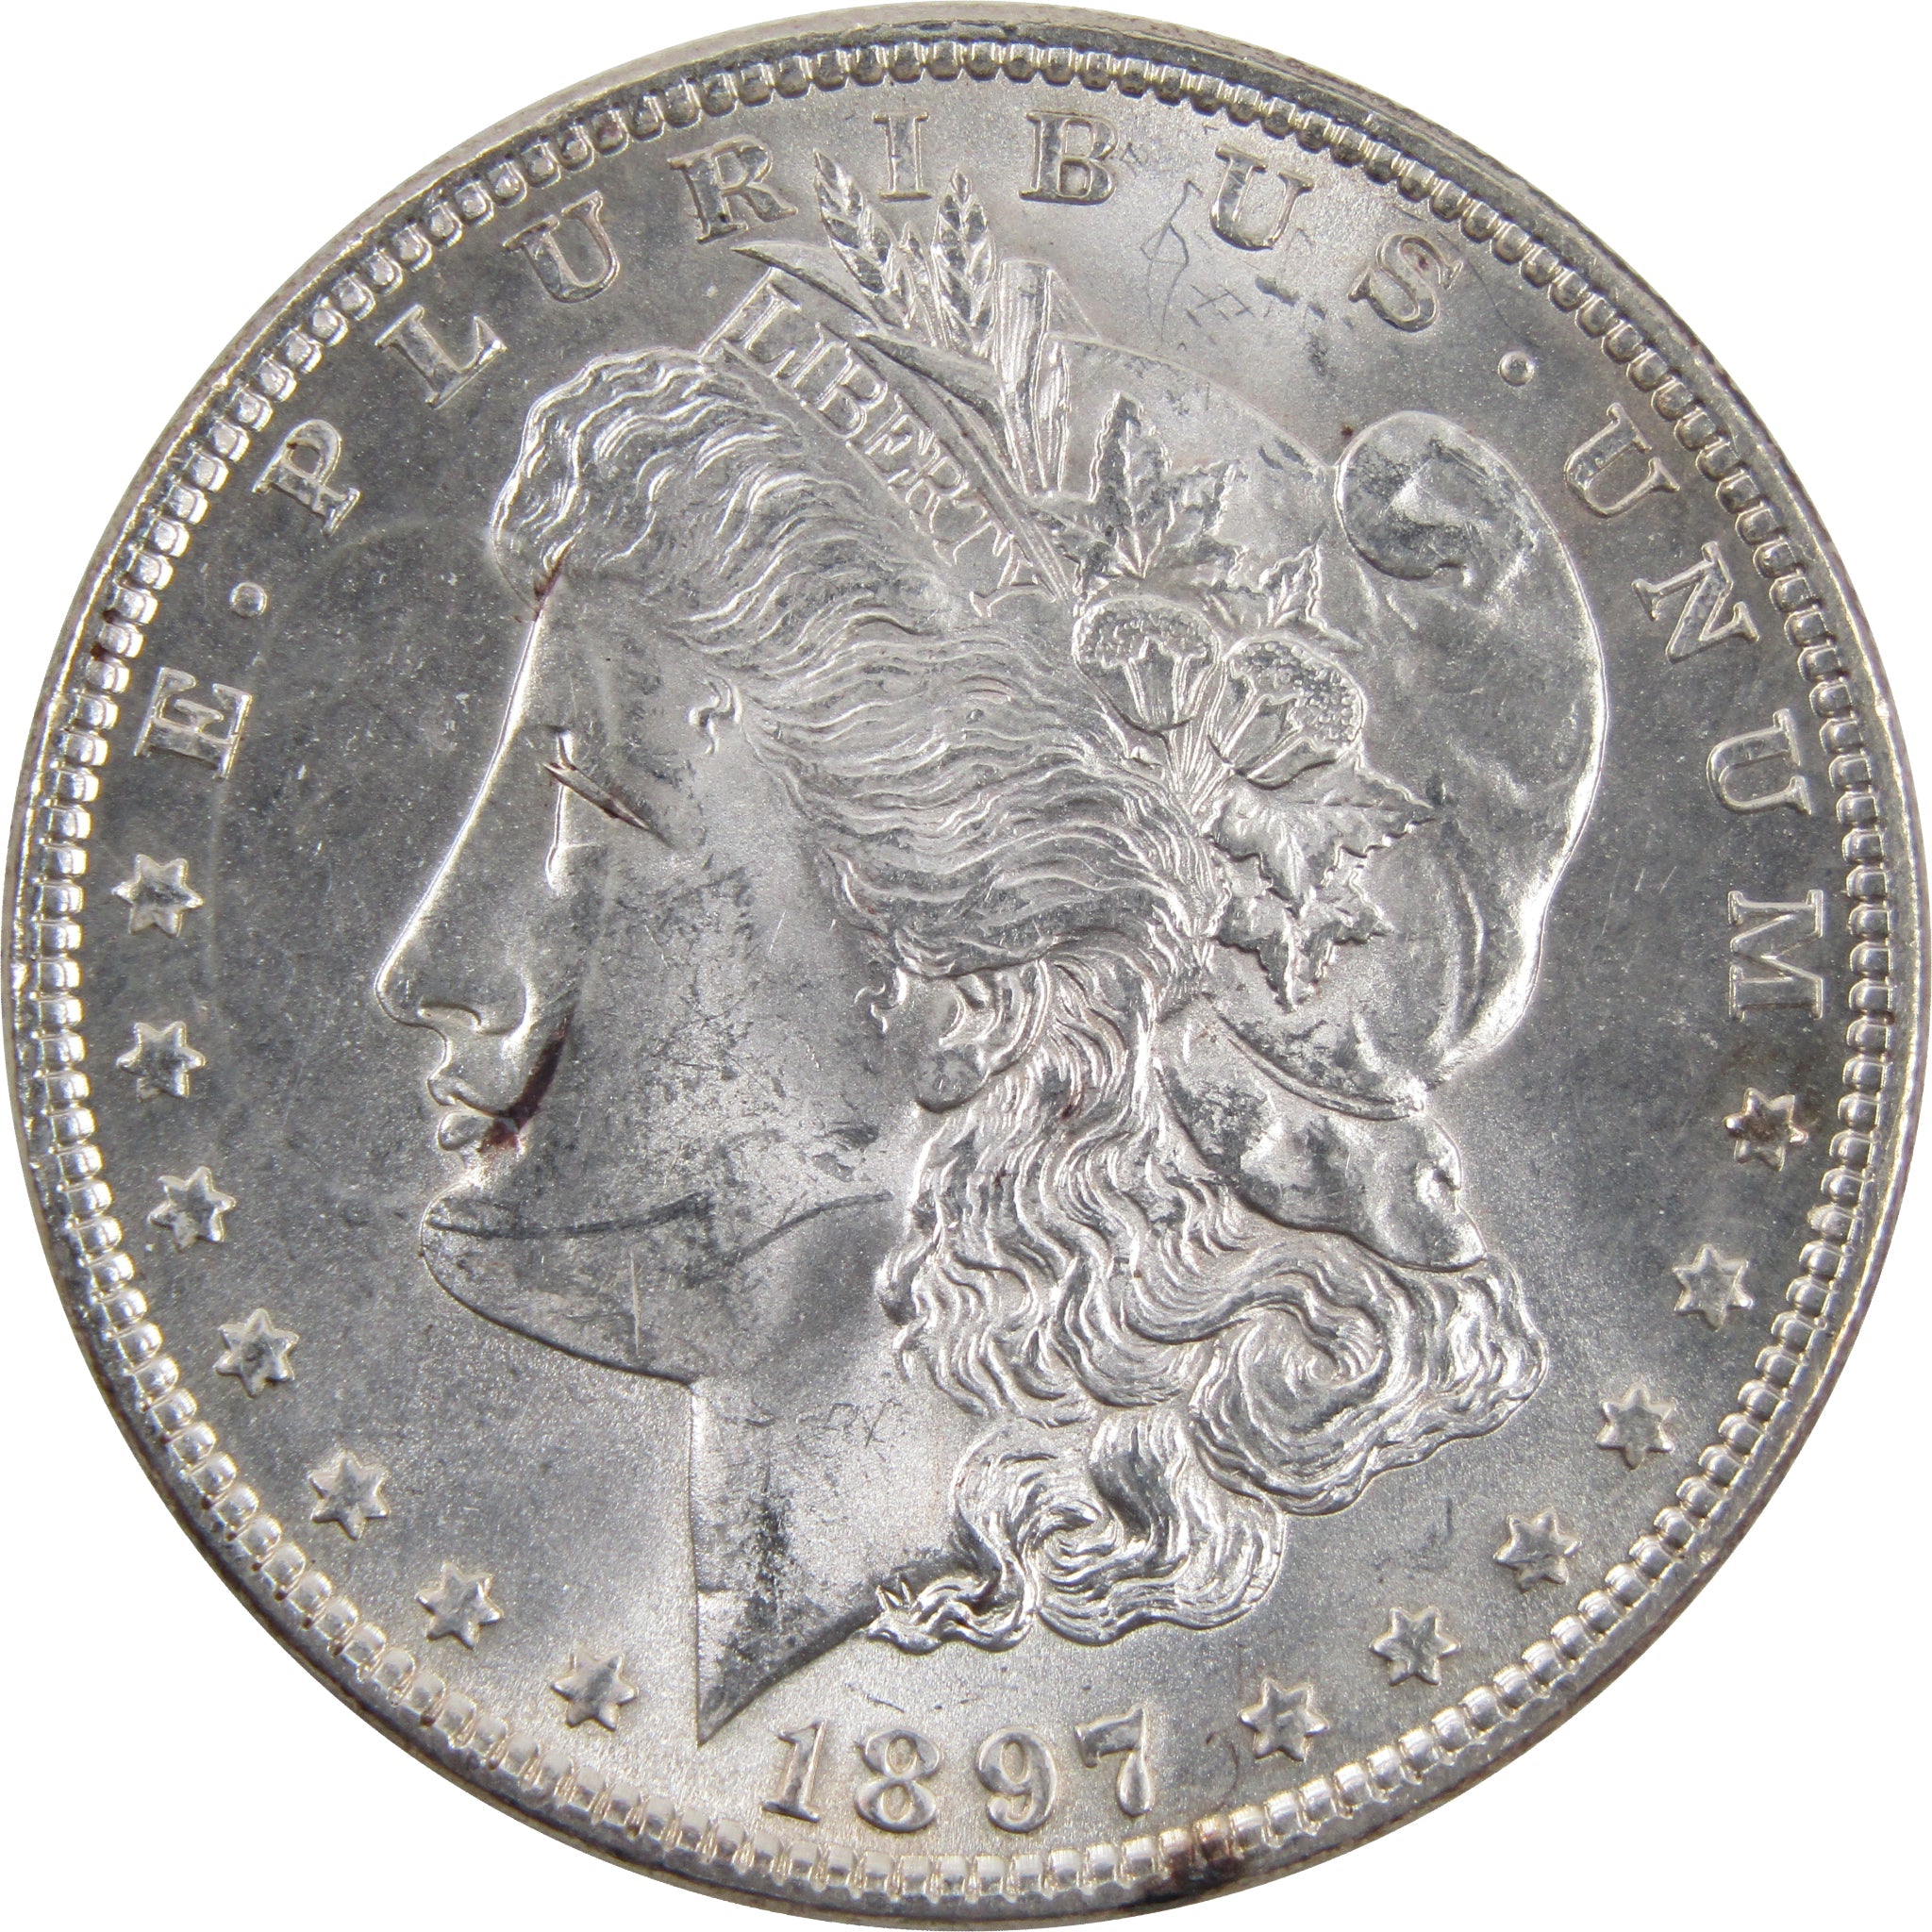 1897 Pitted Reverse VAM 6A Morgan Dollar Uncirculated Silver SKU:I2620 - Morgan coin - Morgan silver dollar - Morgan silver dollar for sale - Profile Coins &amp; Collectibles